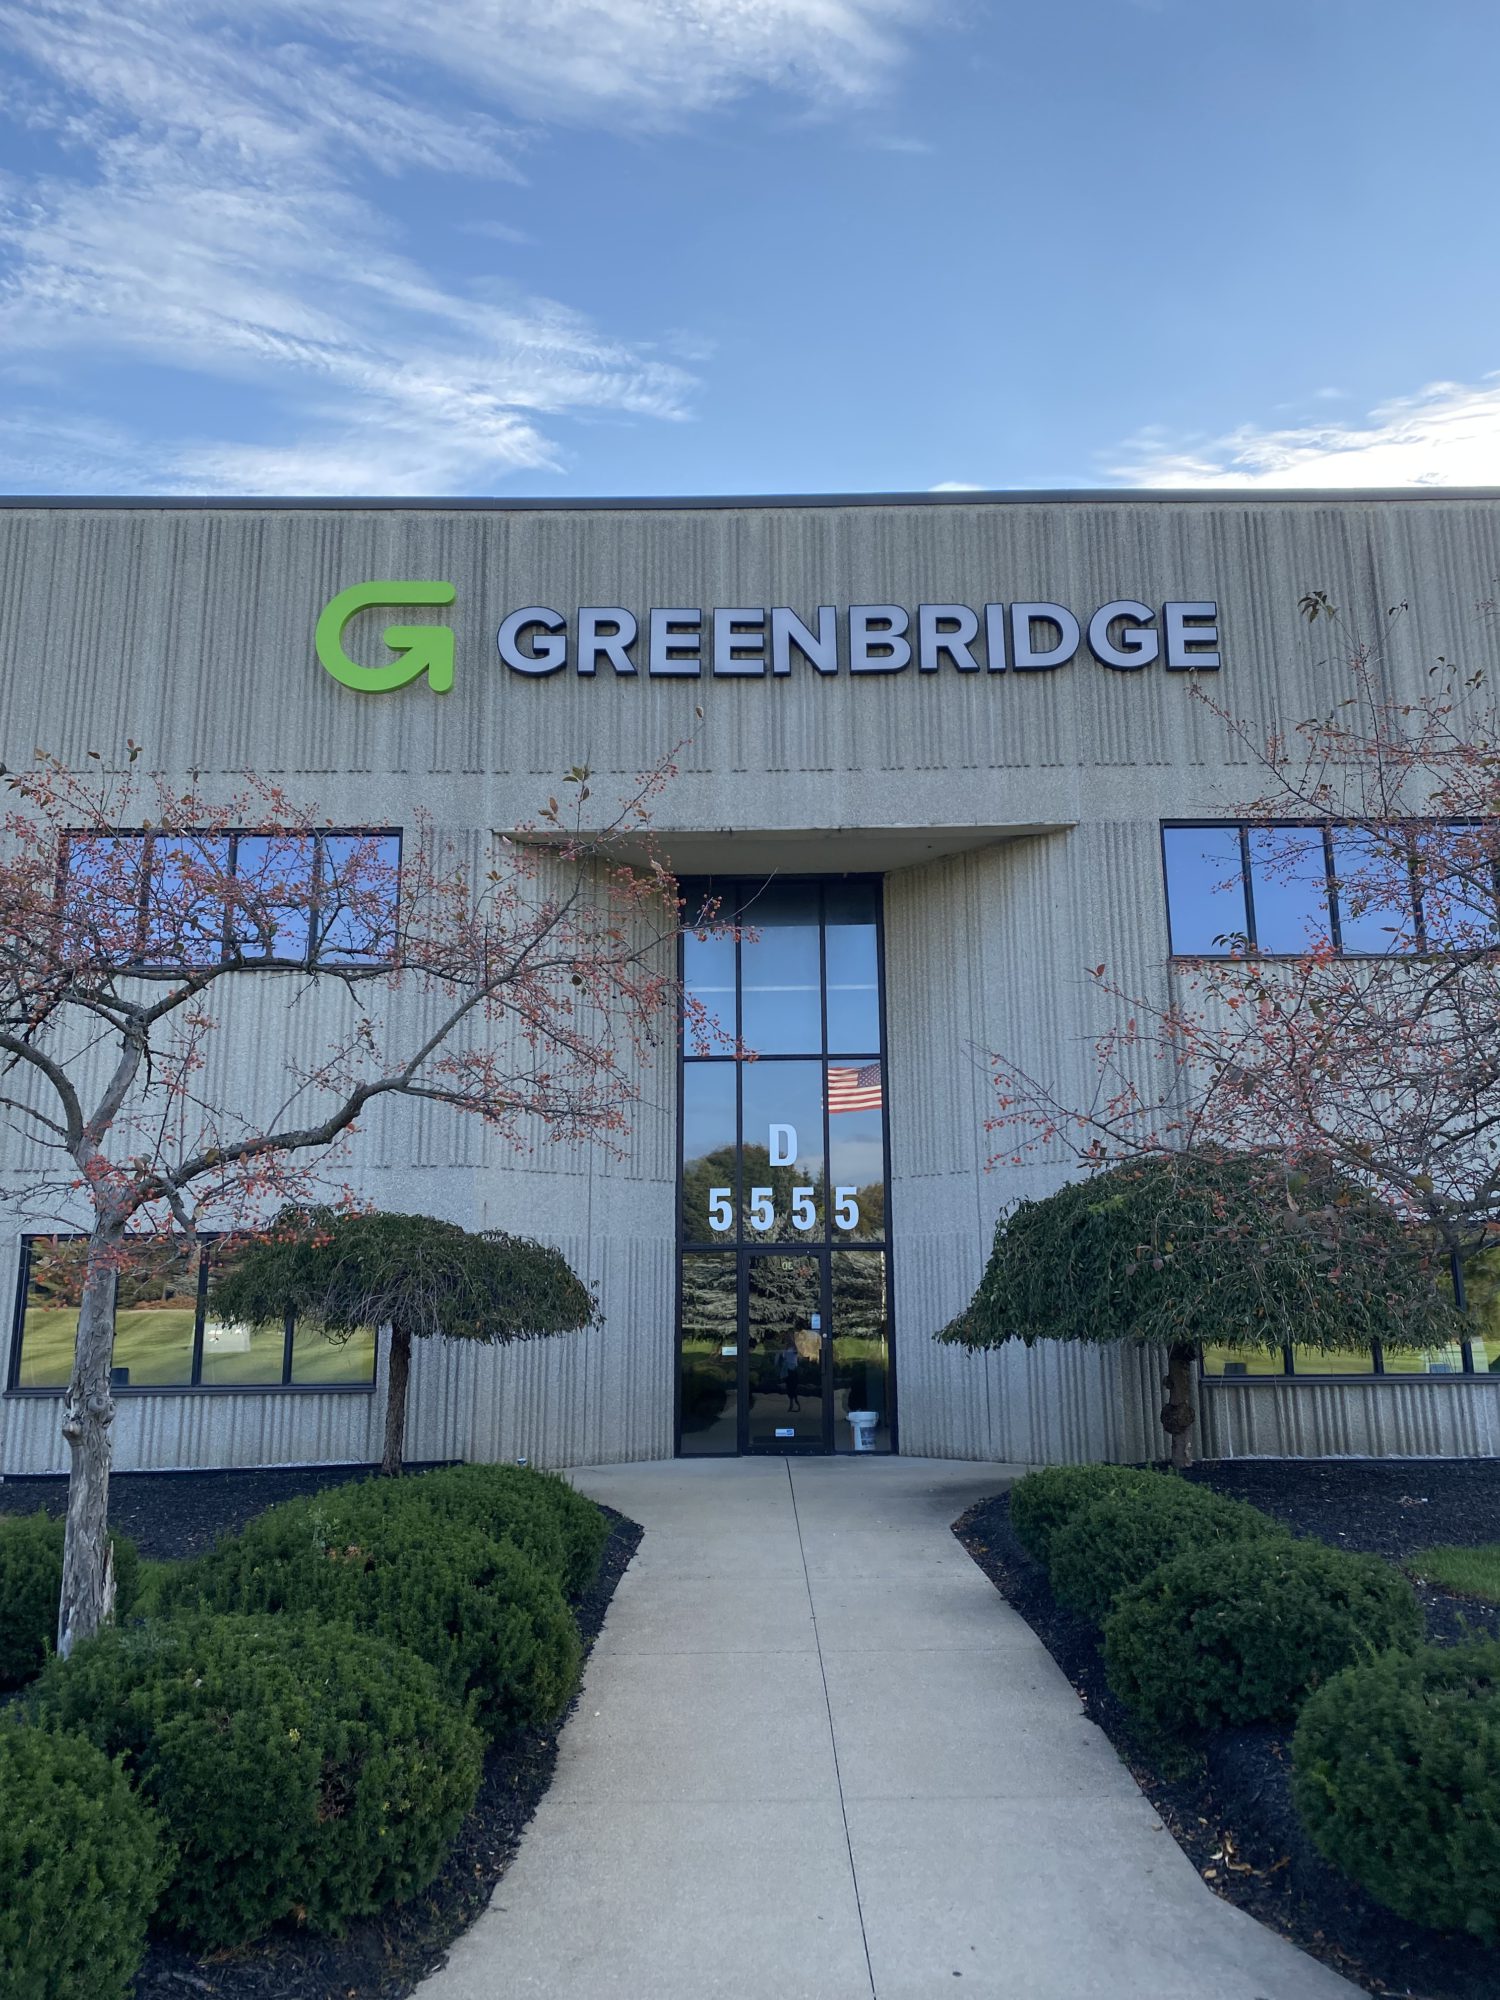 Greenbridge Green Ohio Location